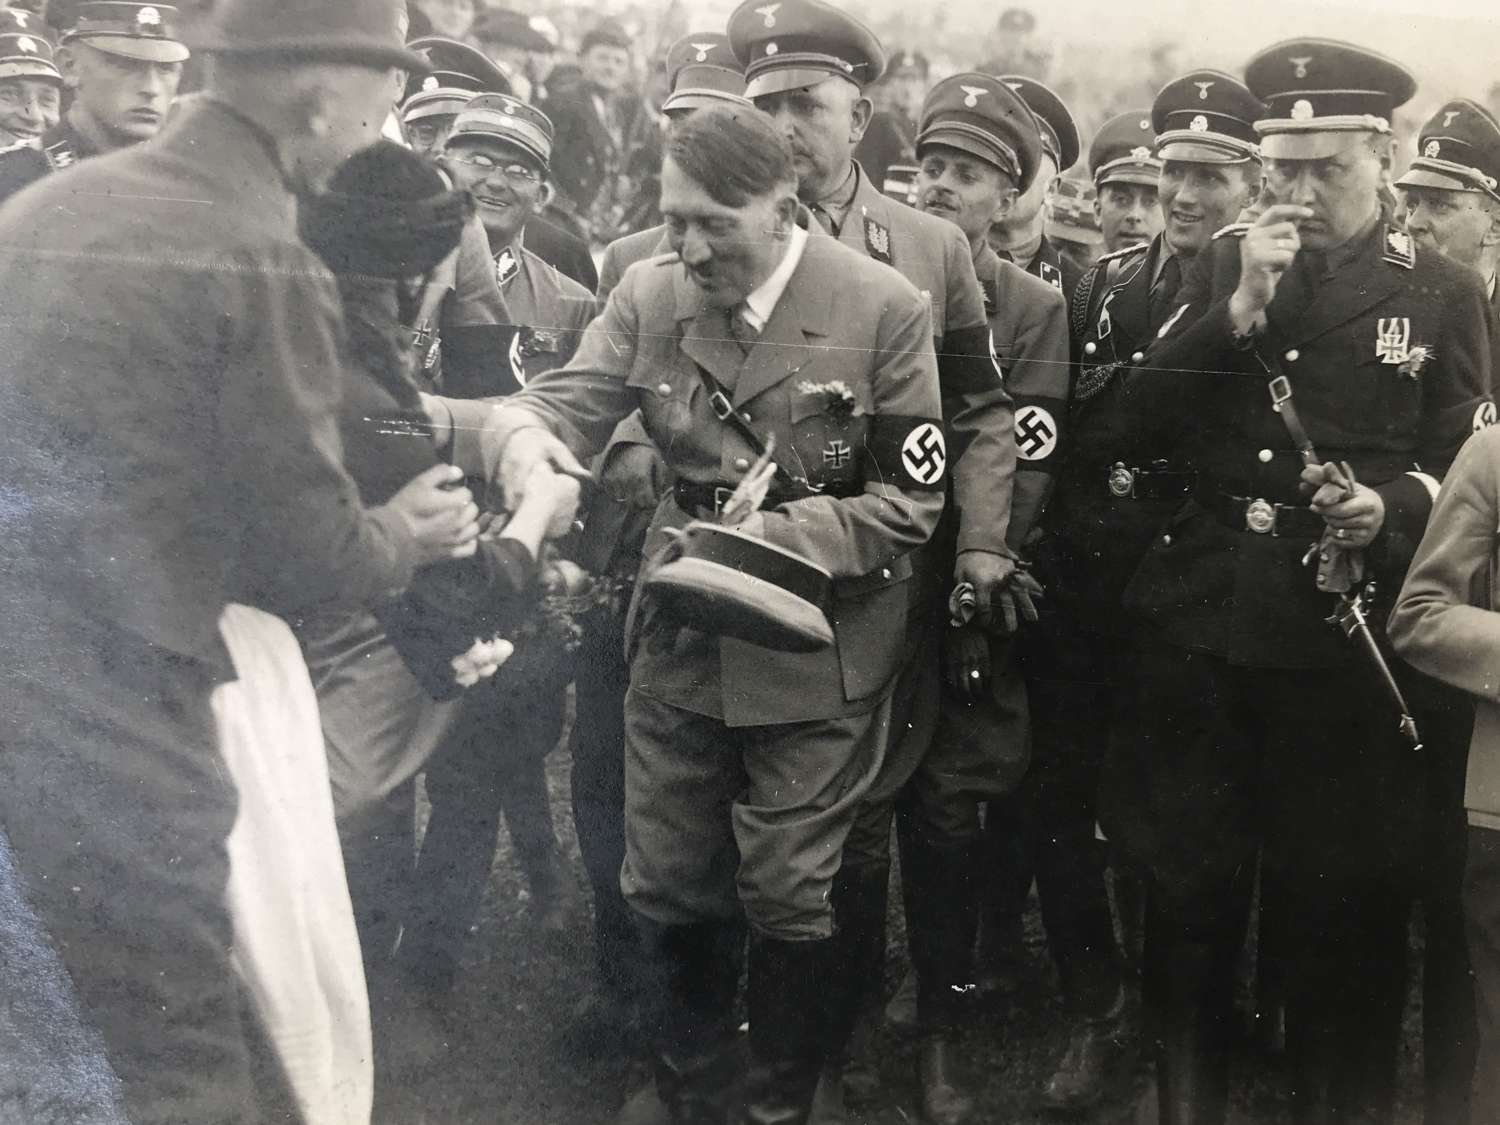 Postcard sized image of Adolf Hitler